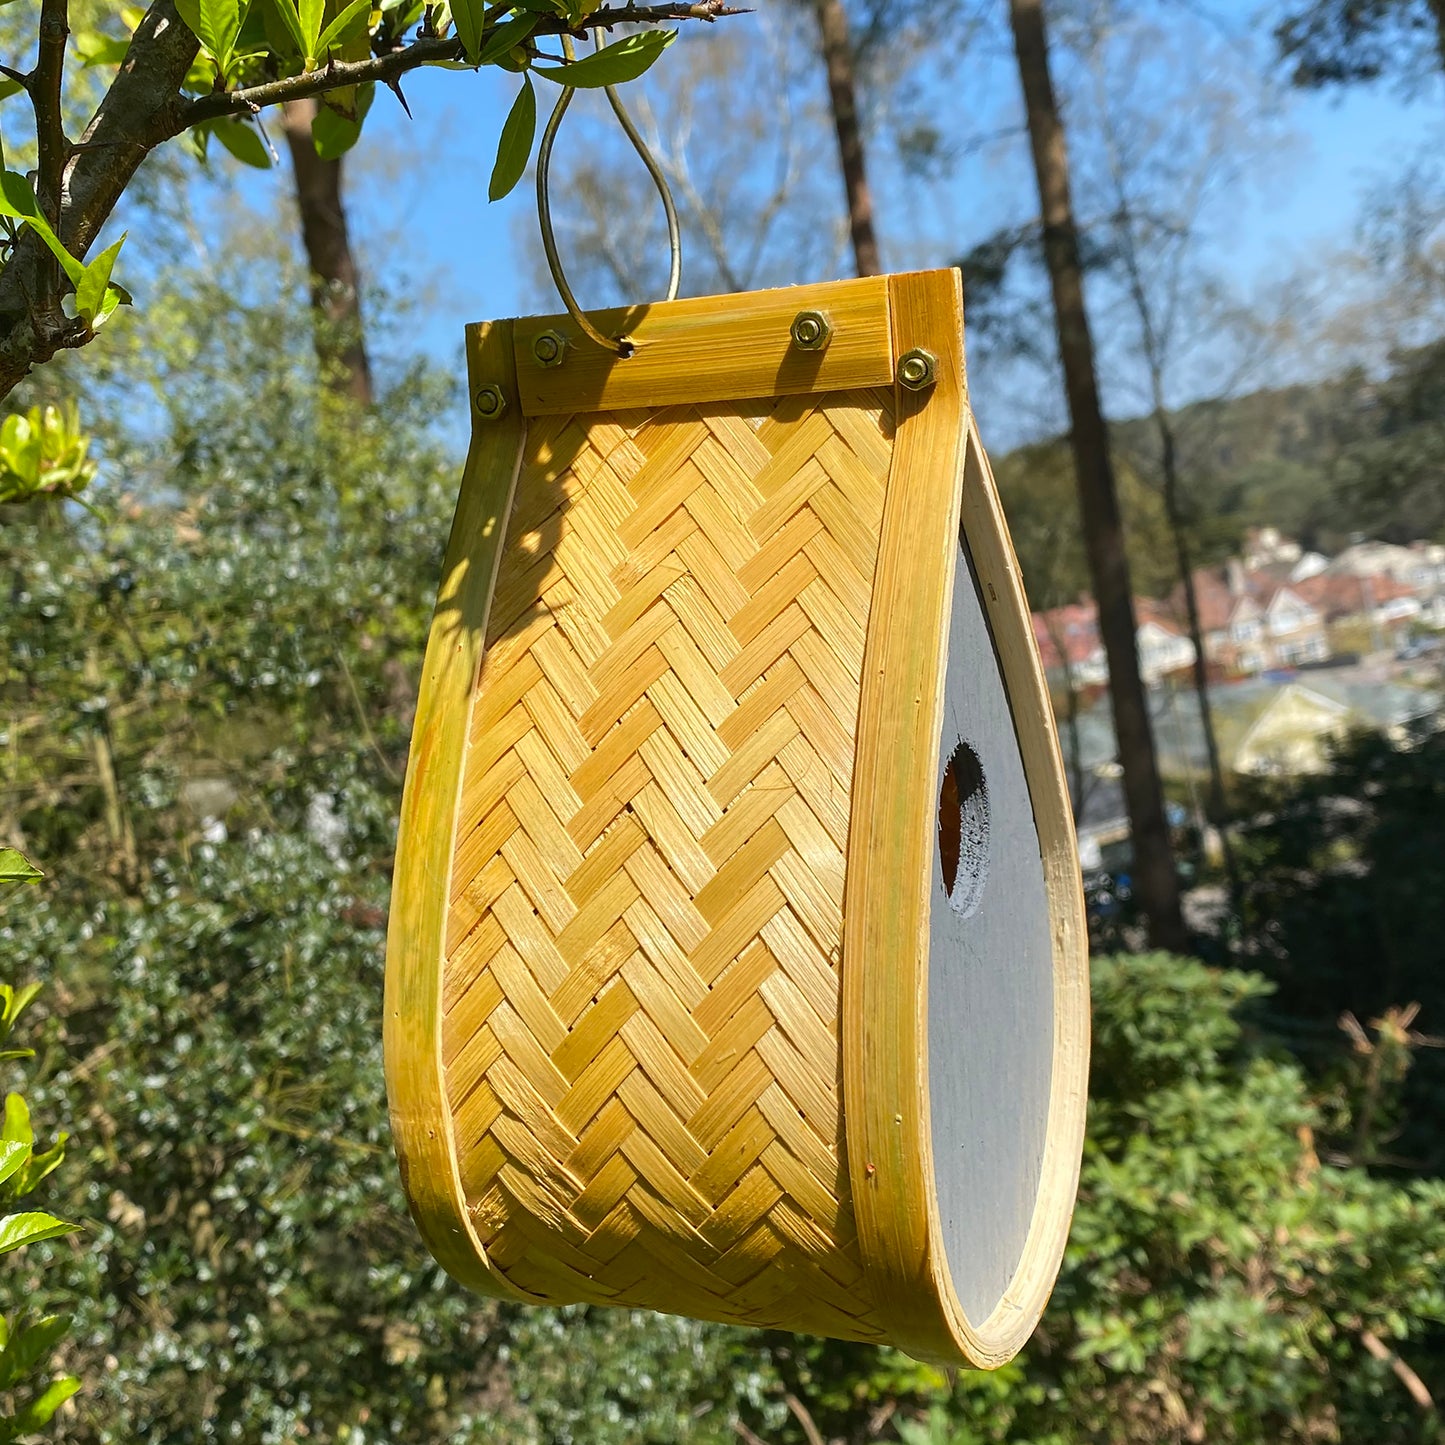 Hanging Teardrop Bird Nest Box